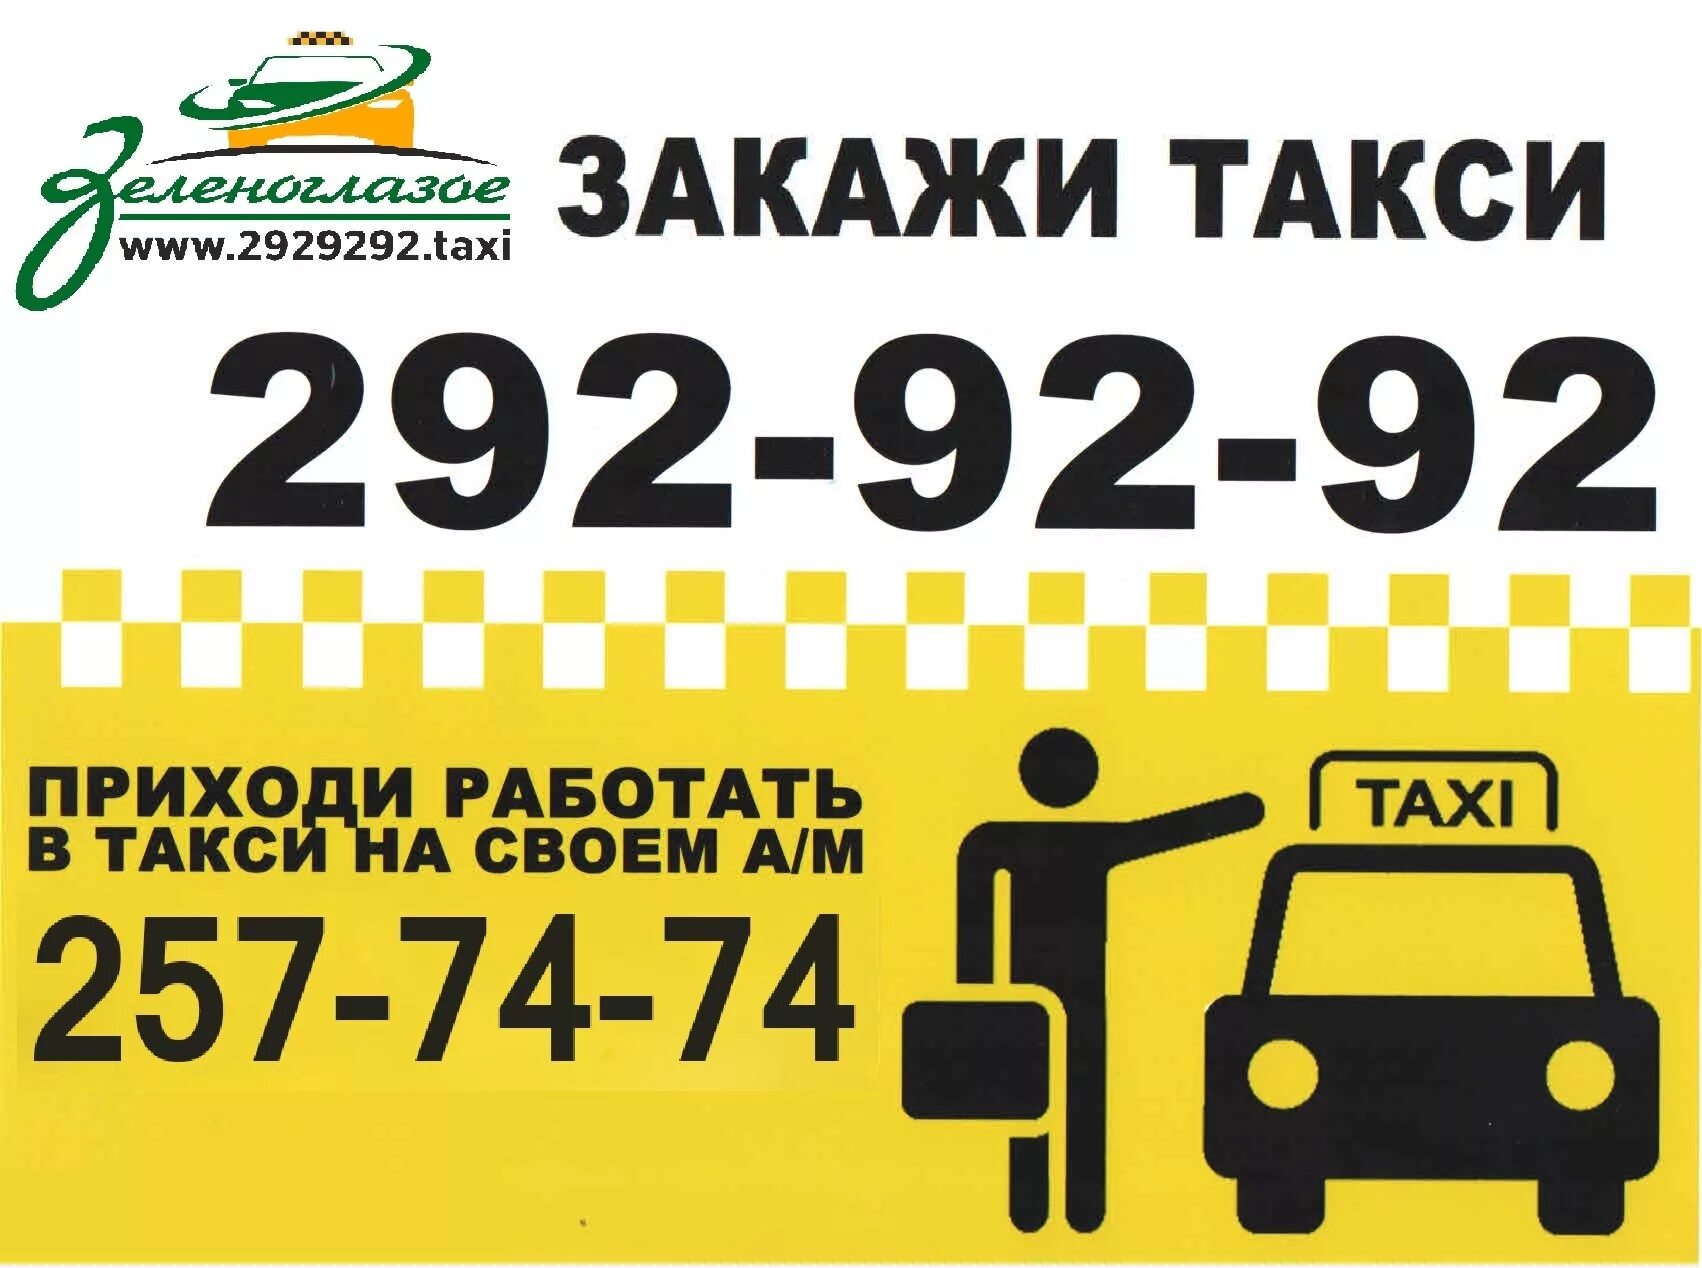 Единый телефон такси. Закажи такси. Самое дешевое такси номер. Такси Уфа. Номер недорогого такси.